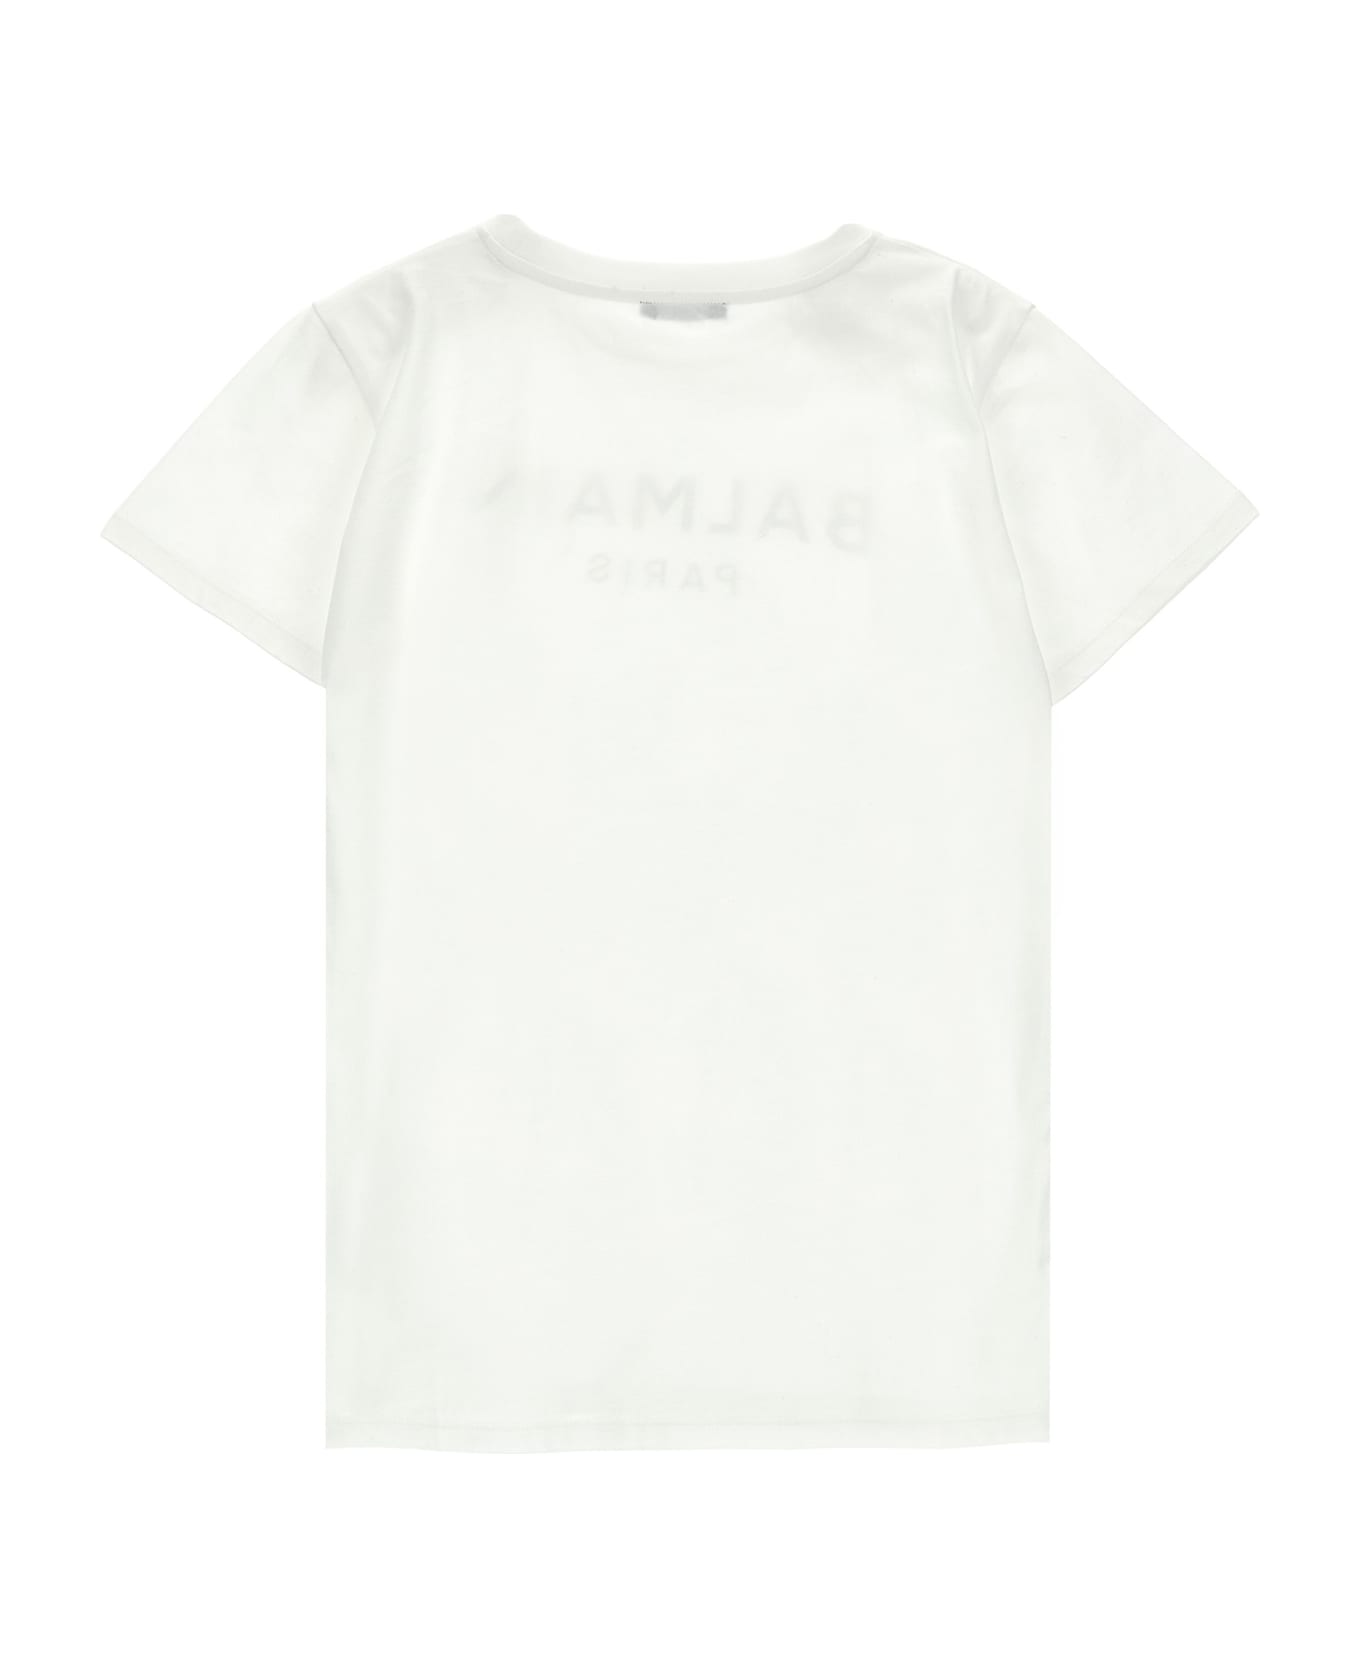 Balmain Rhinestone Logo T-shirt - Bianco e Nero